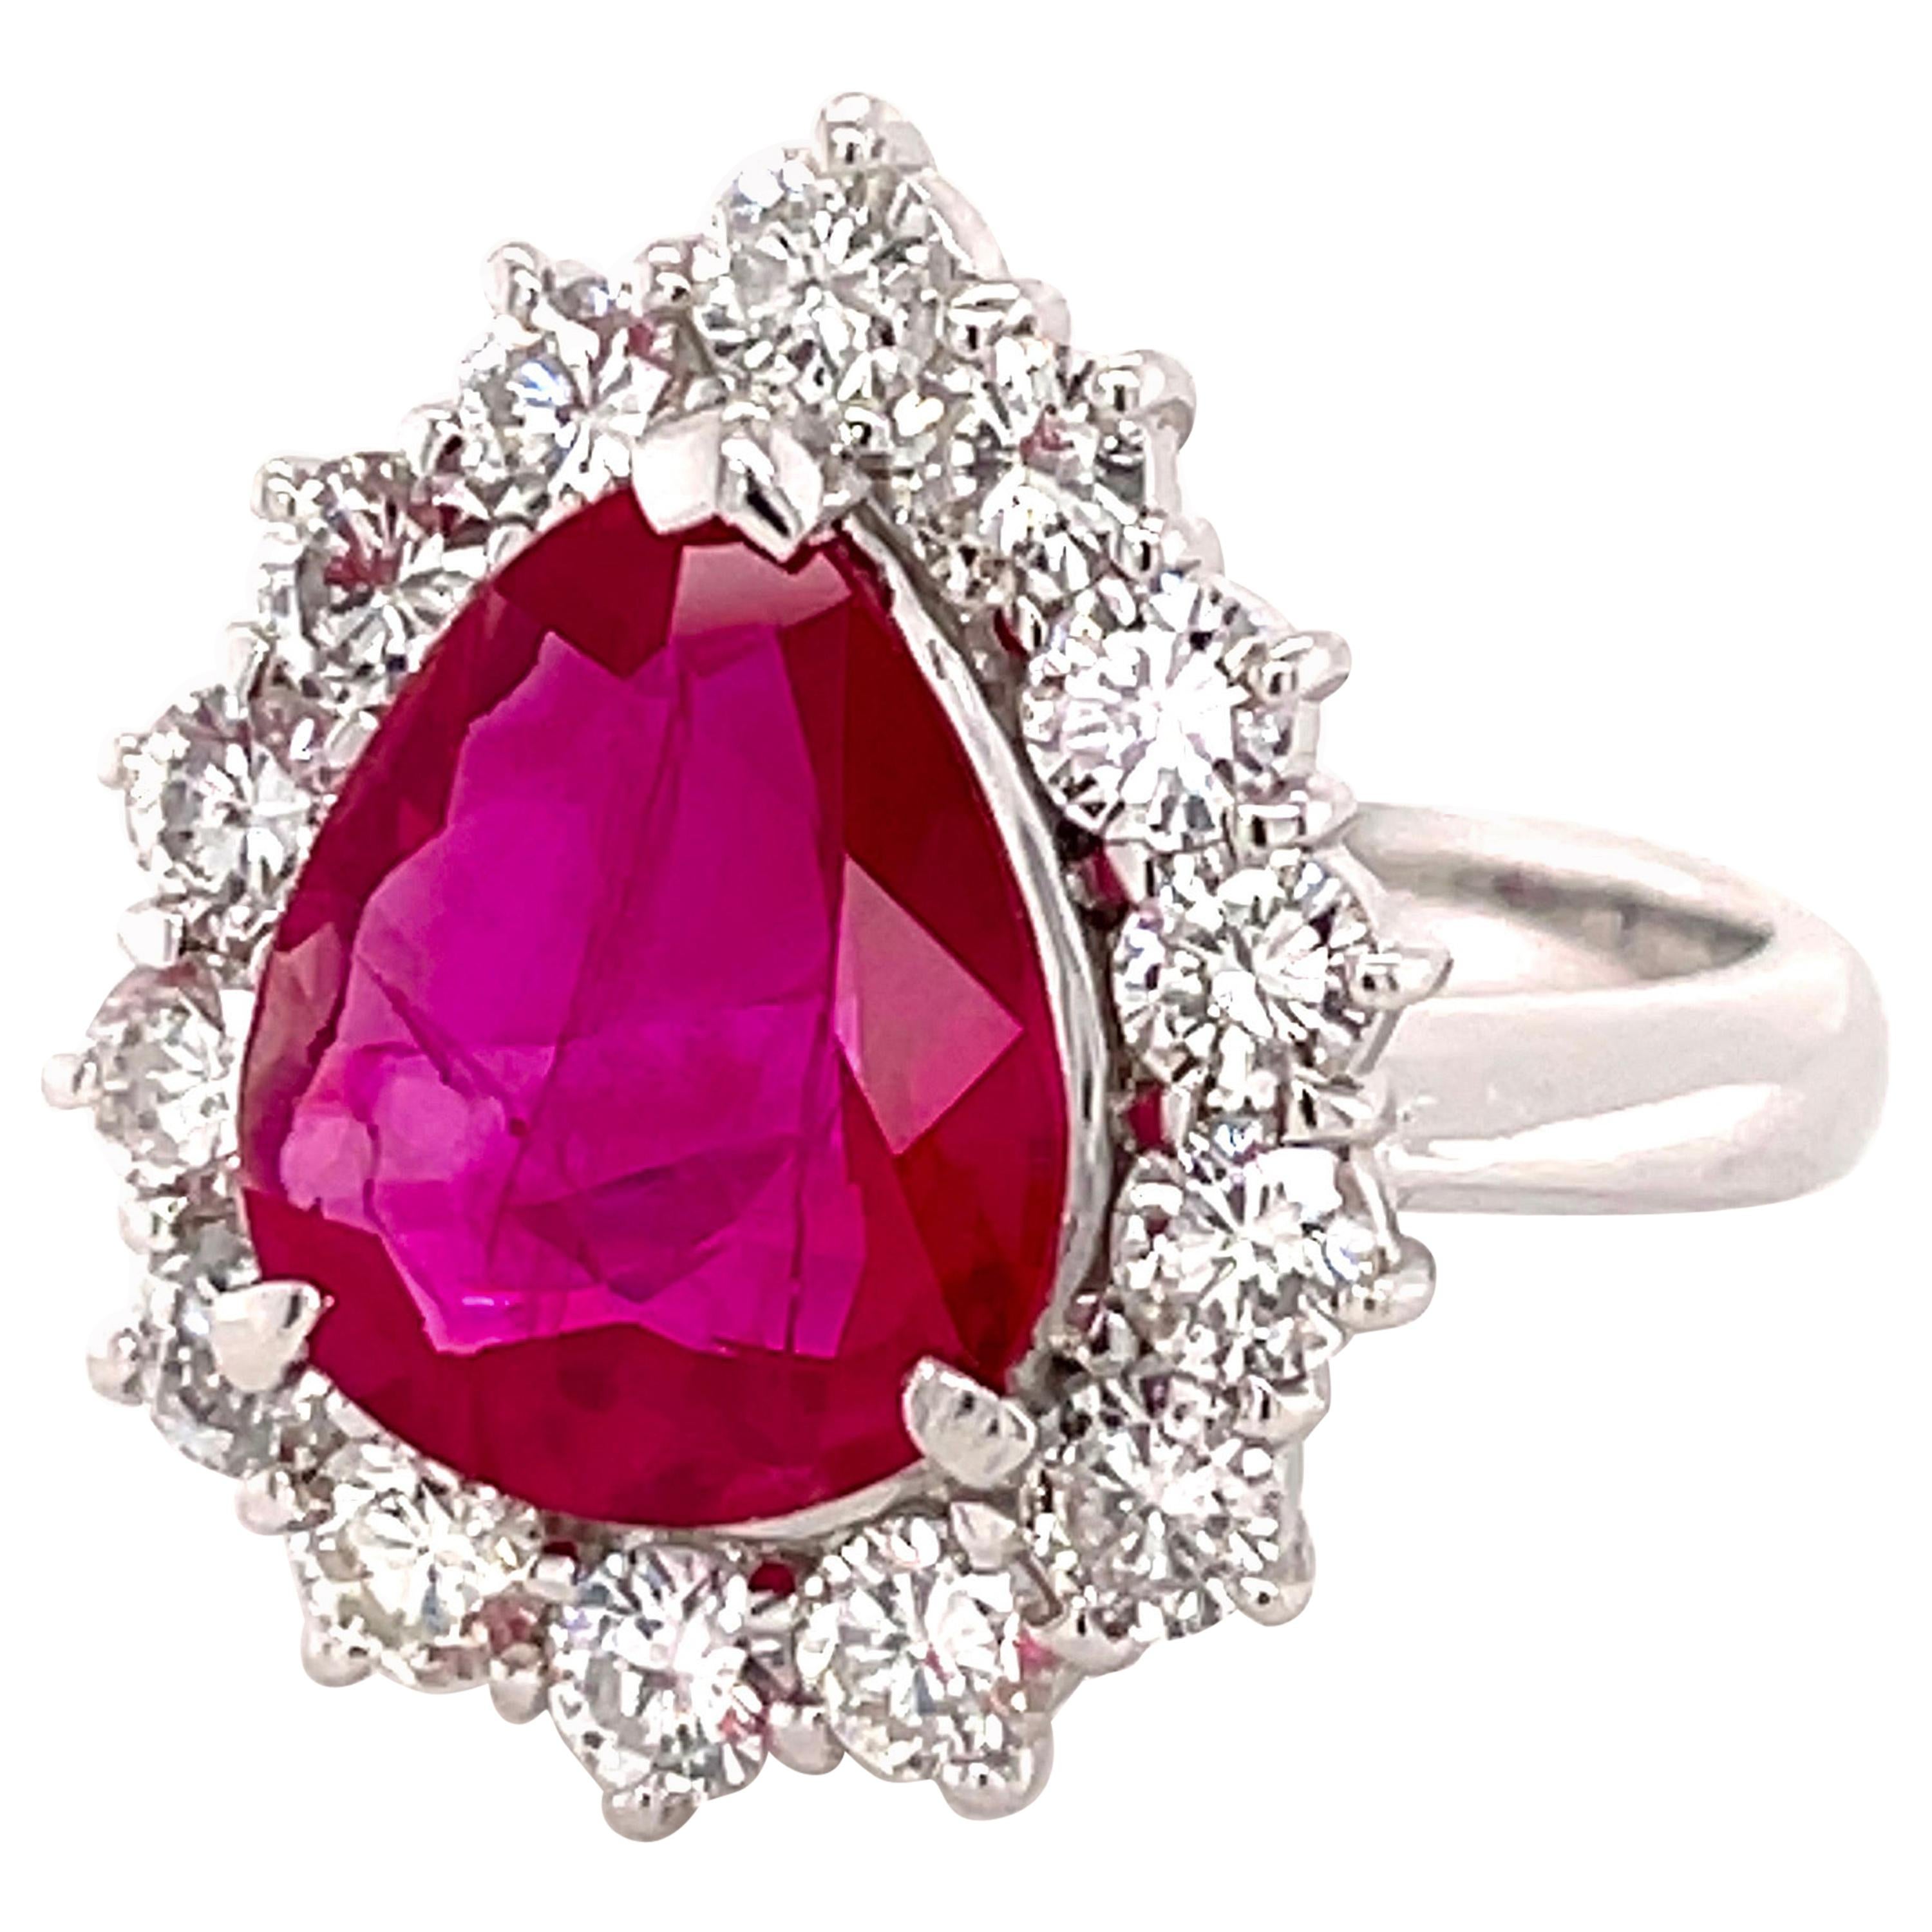 3.57 Carat Burma Ruby and Diamond Ring in Platinum